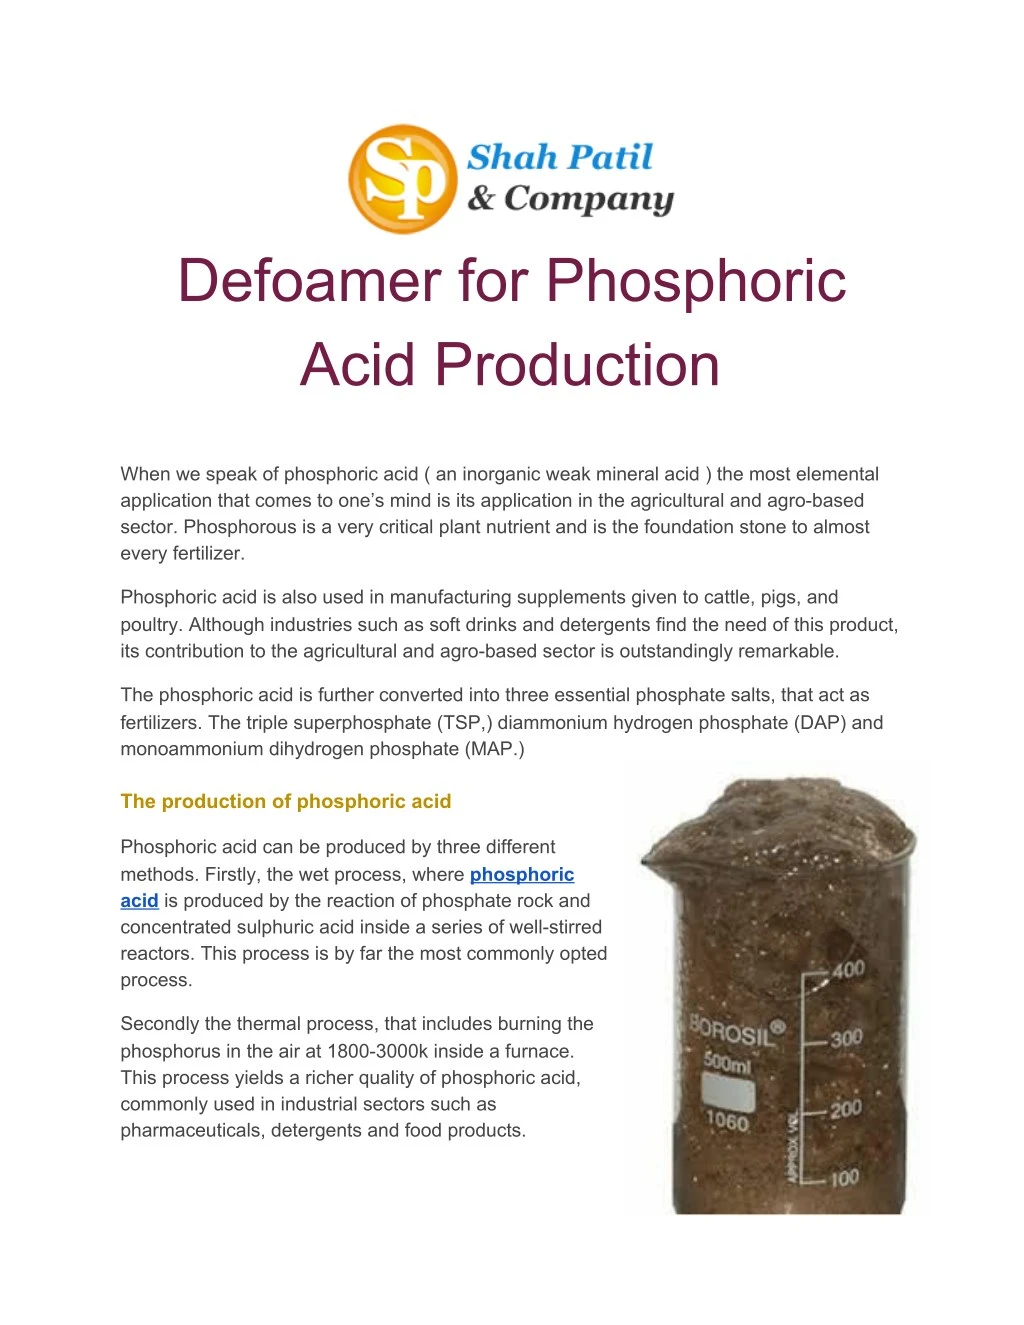 defoamer for phosphoric acid production